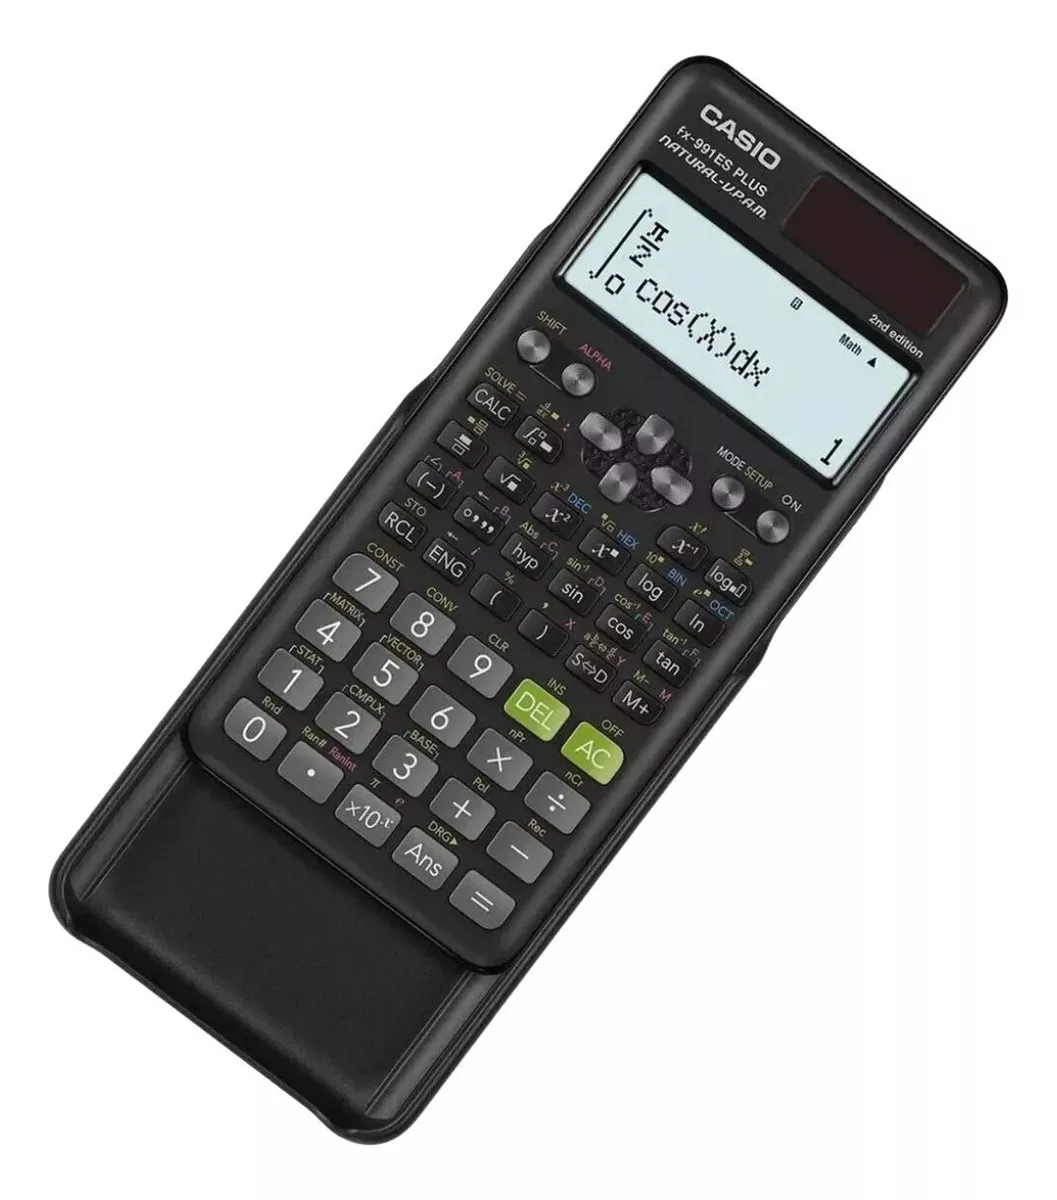 Segunda imagen para búsqueda de calculadora casio fx 991ex